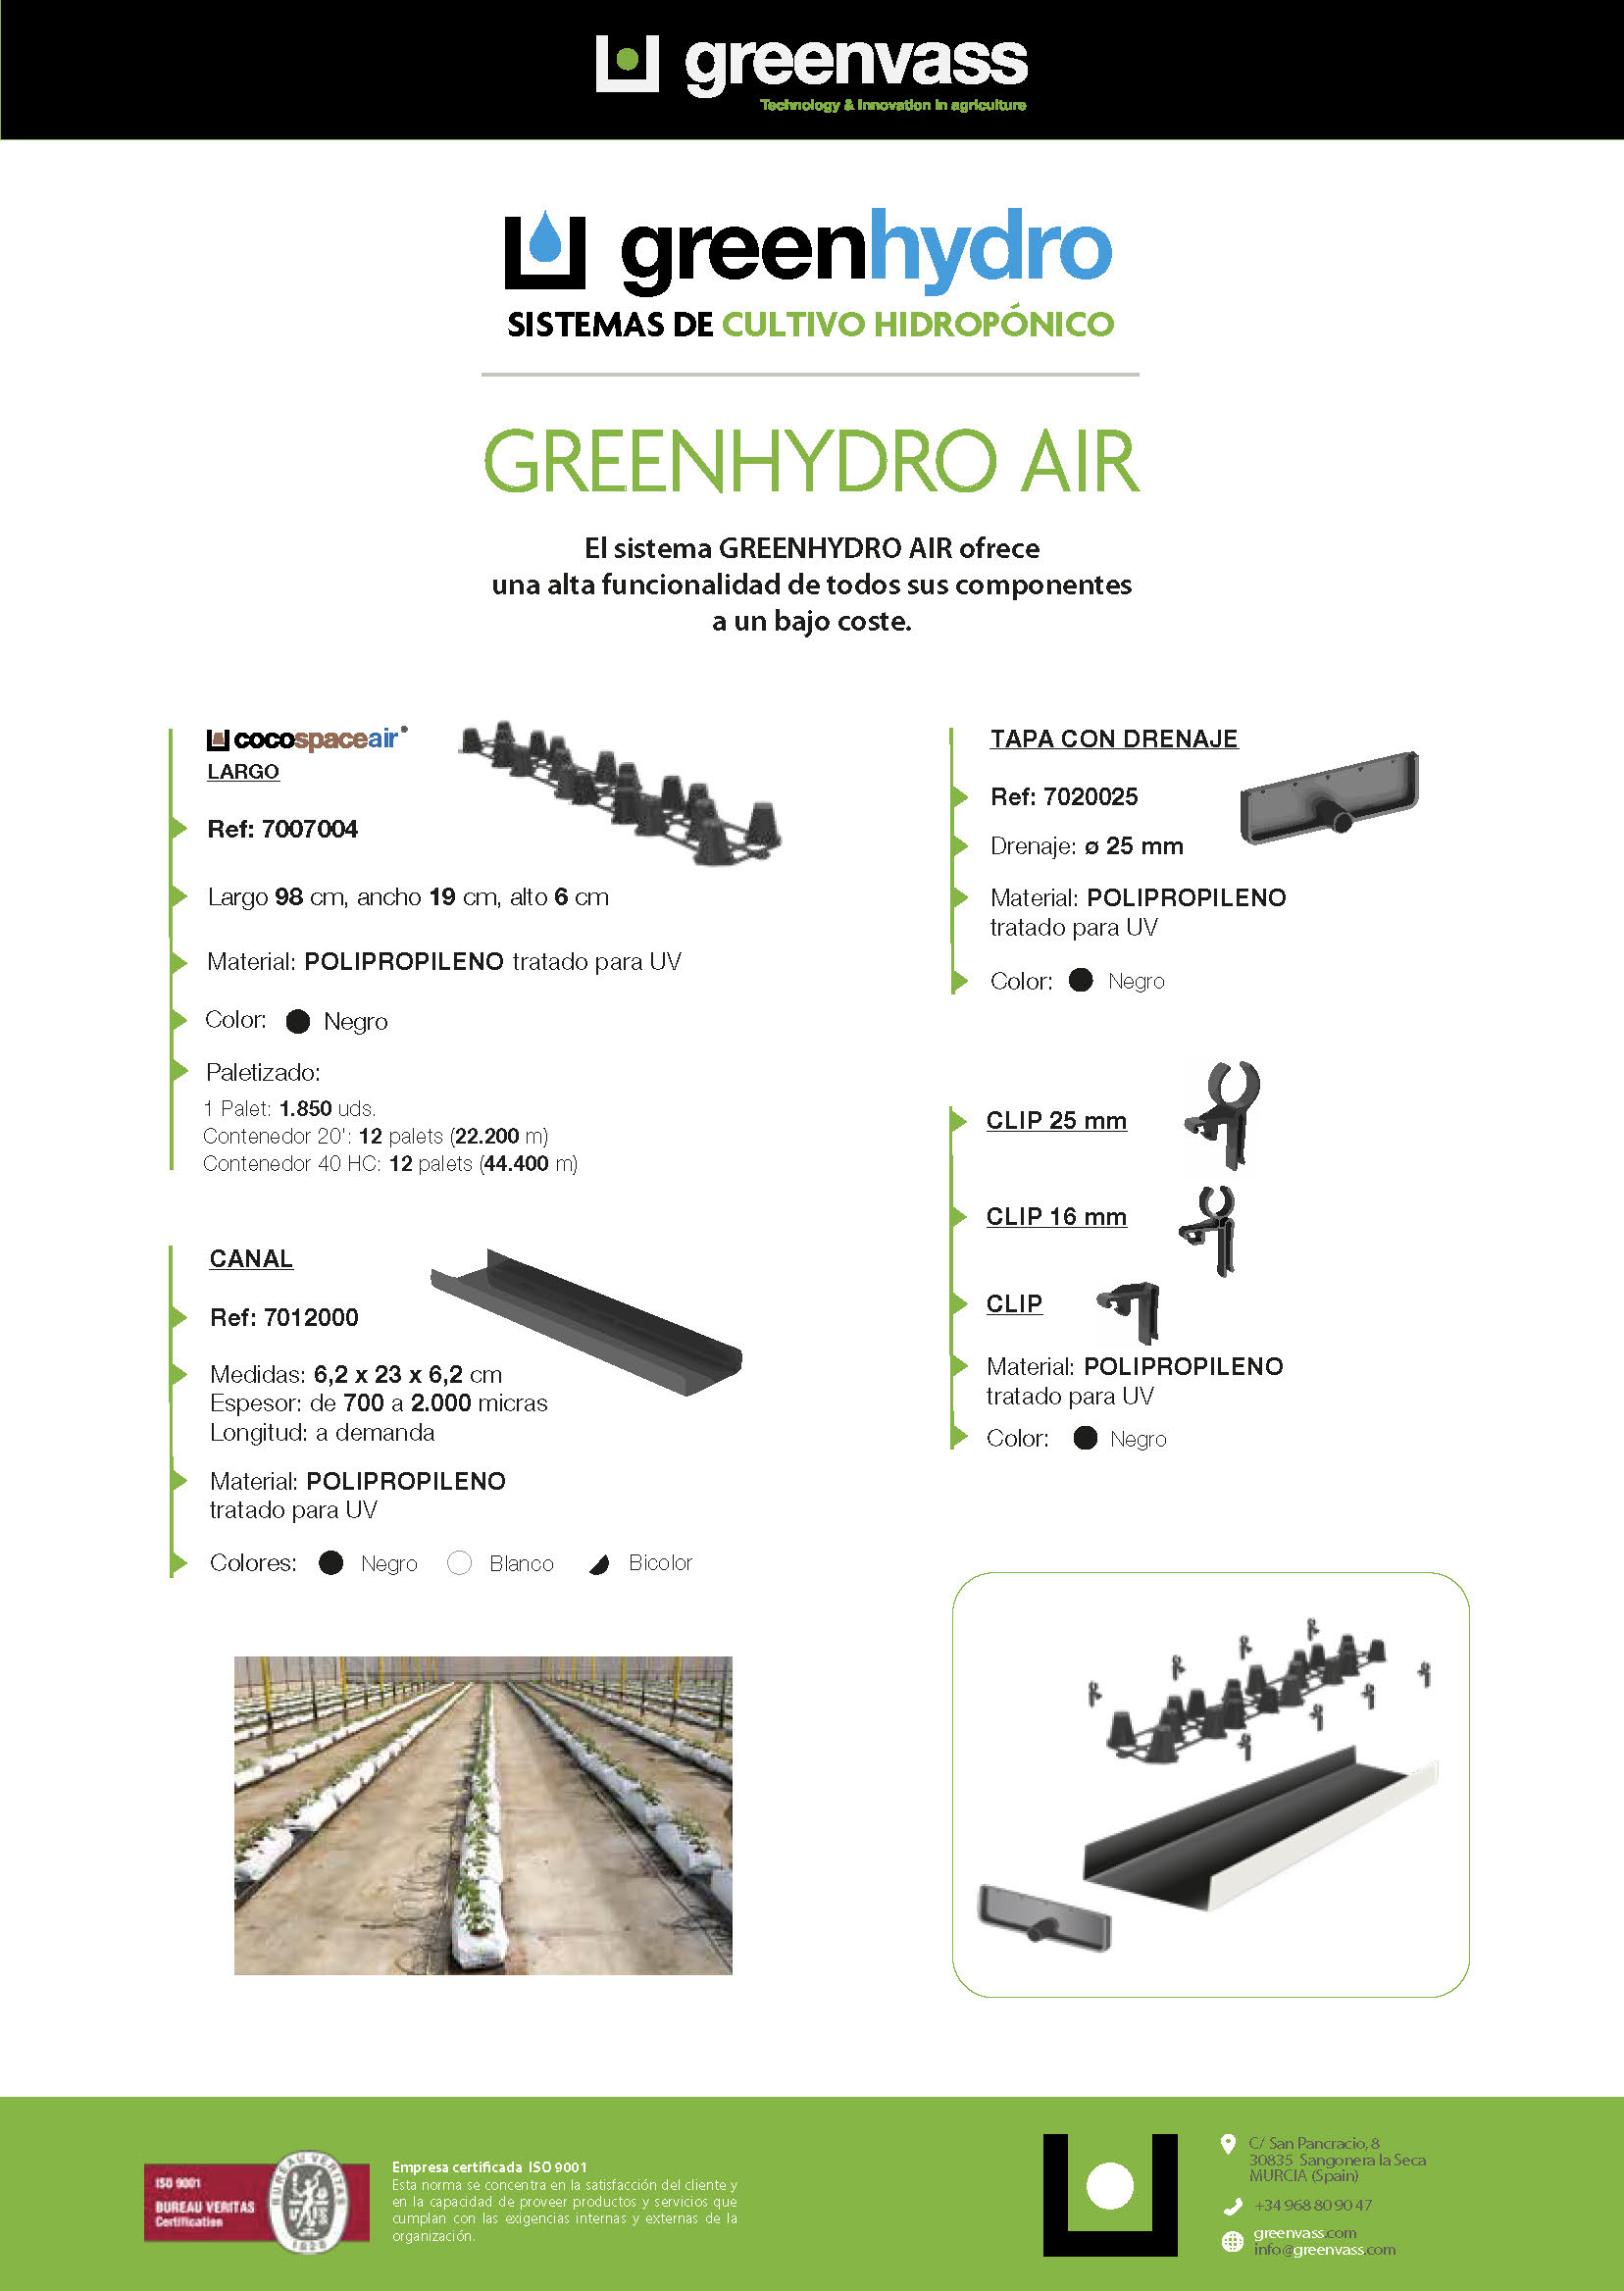 Greenhydro Air